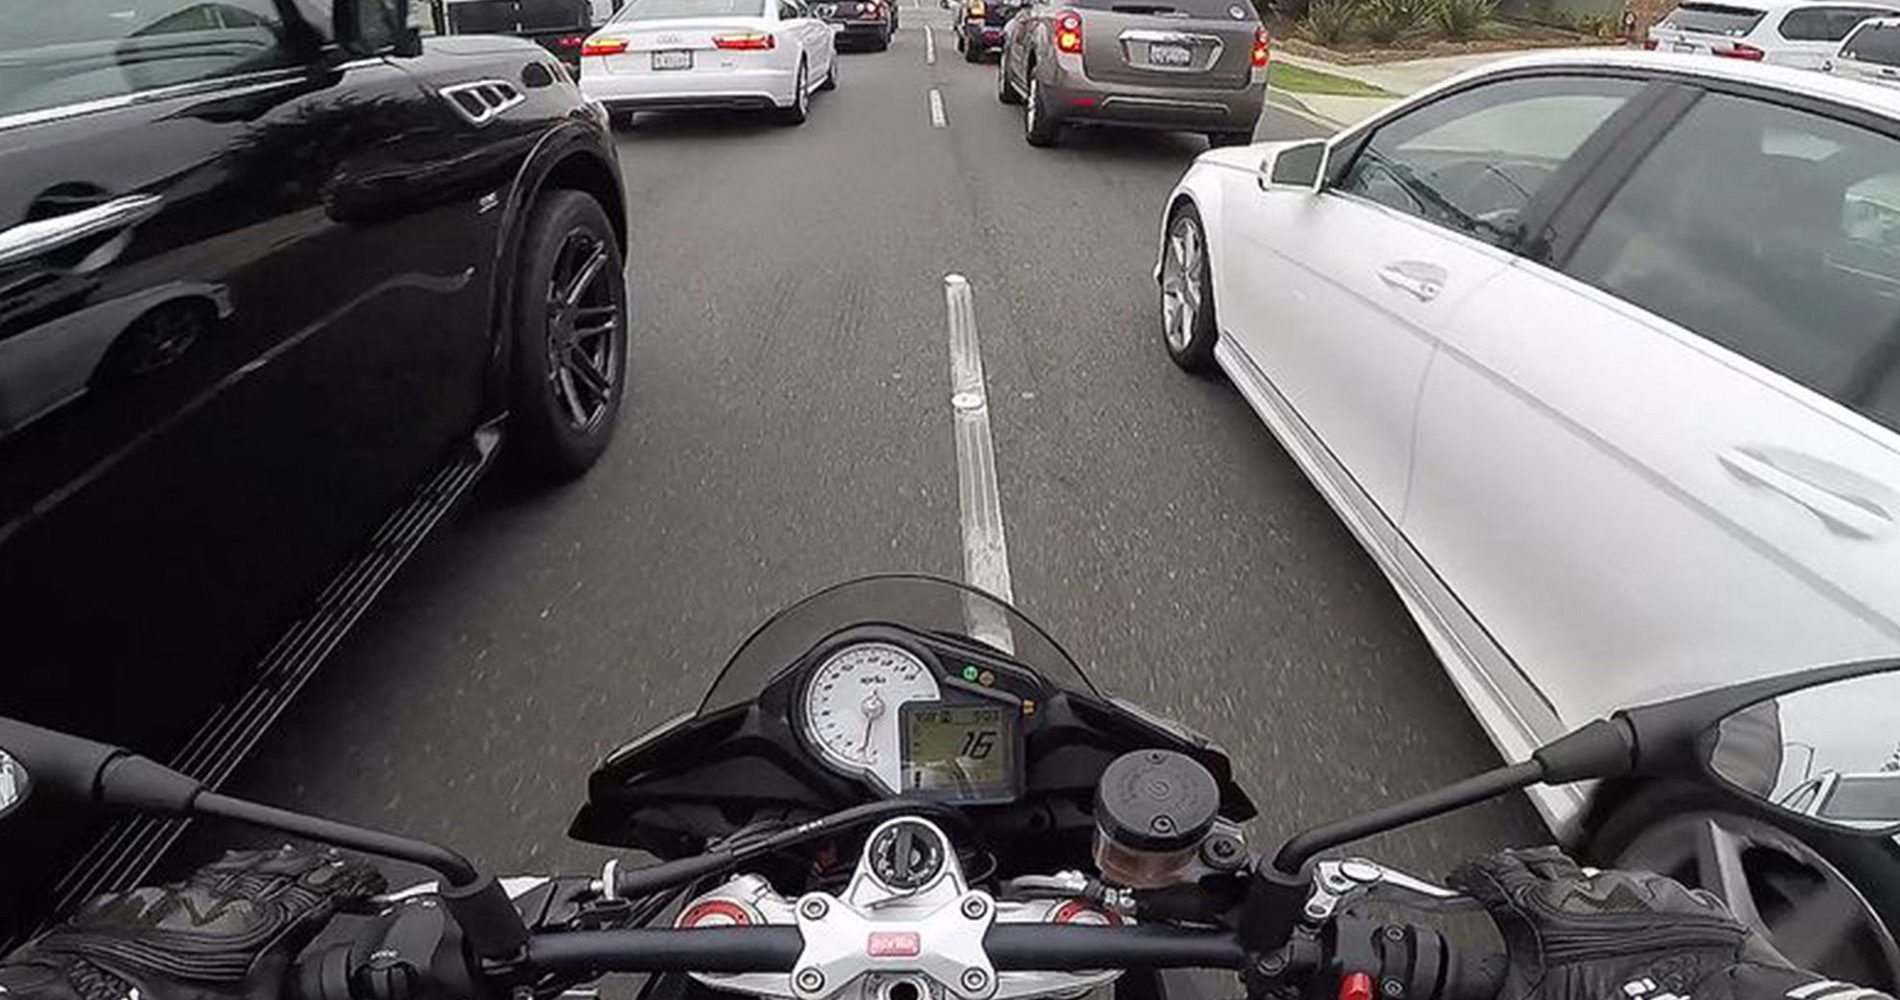 POV of motorcyclist filtering lanes